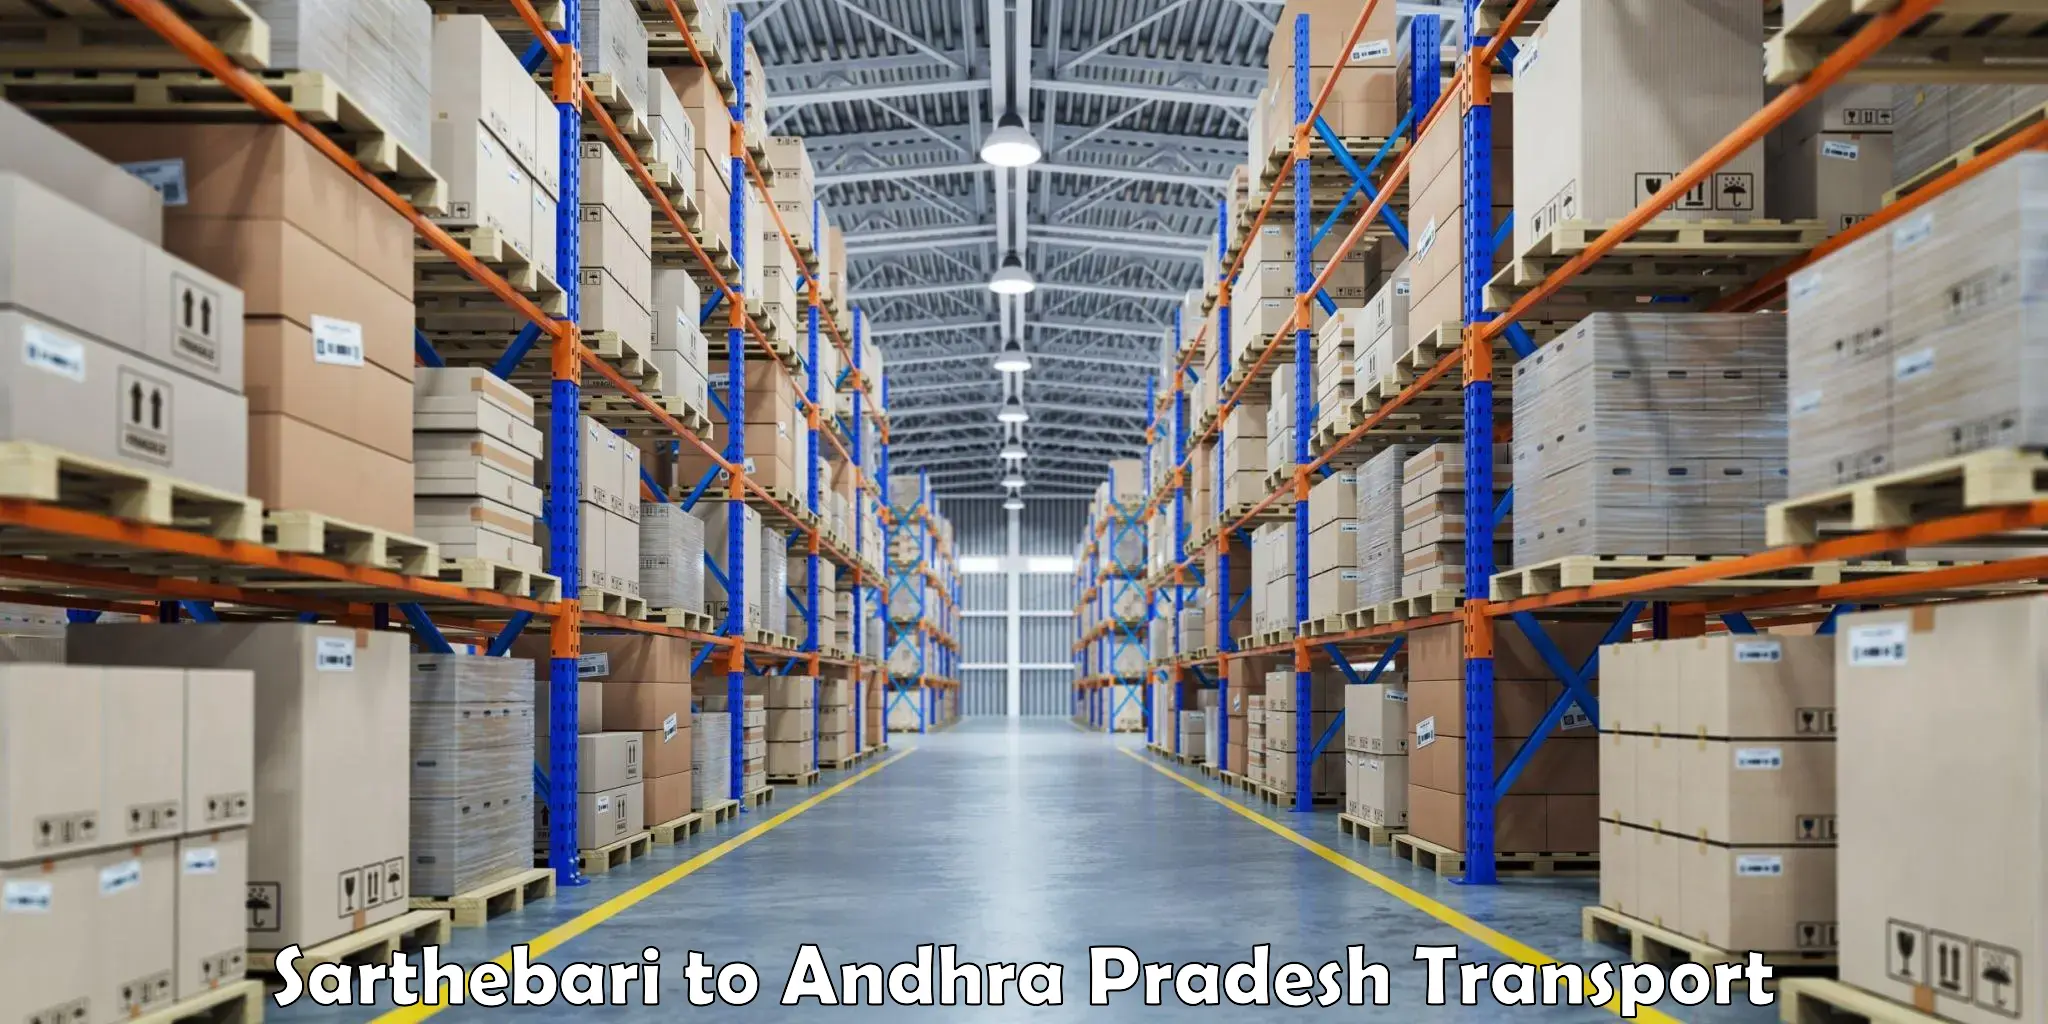 Truck transport companies in India Sarthebari to Kothapalli